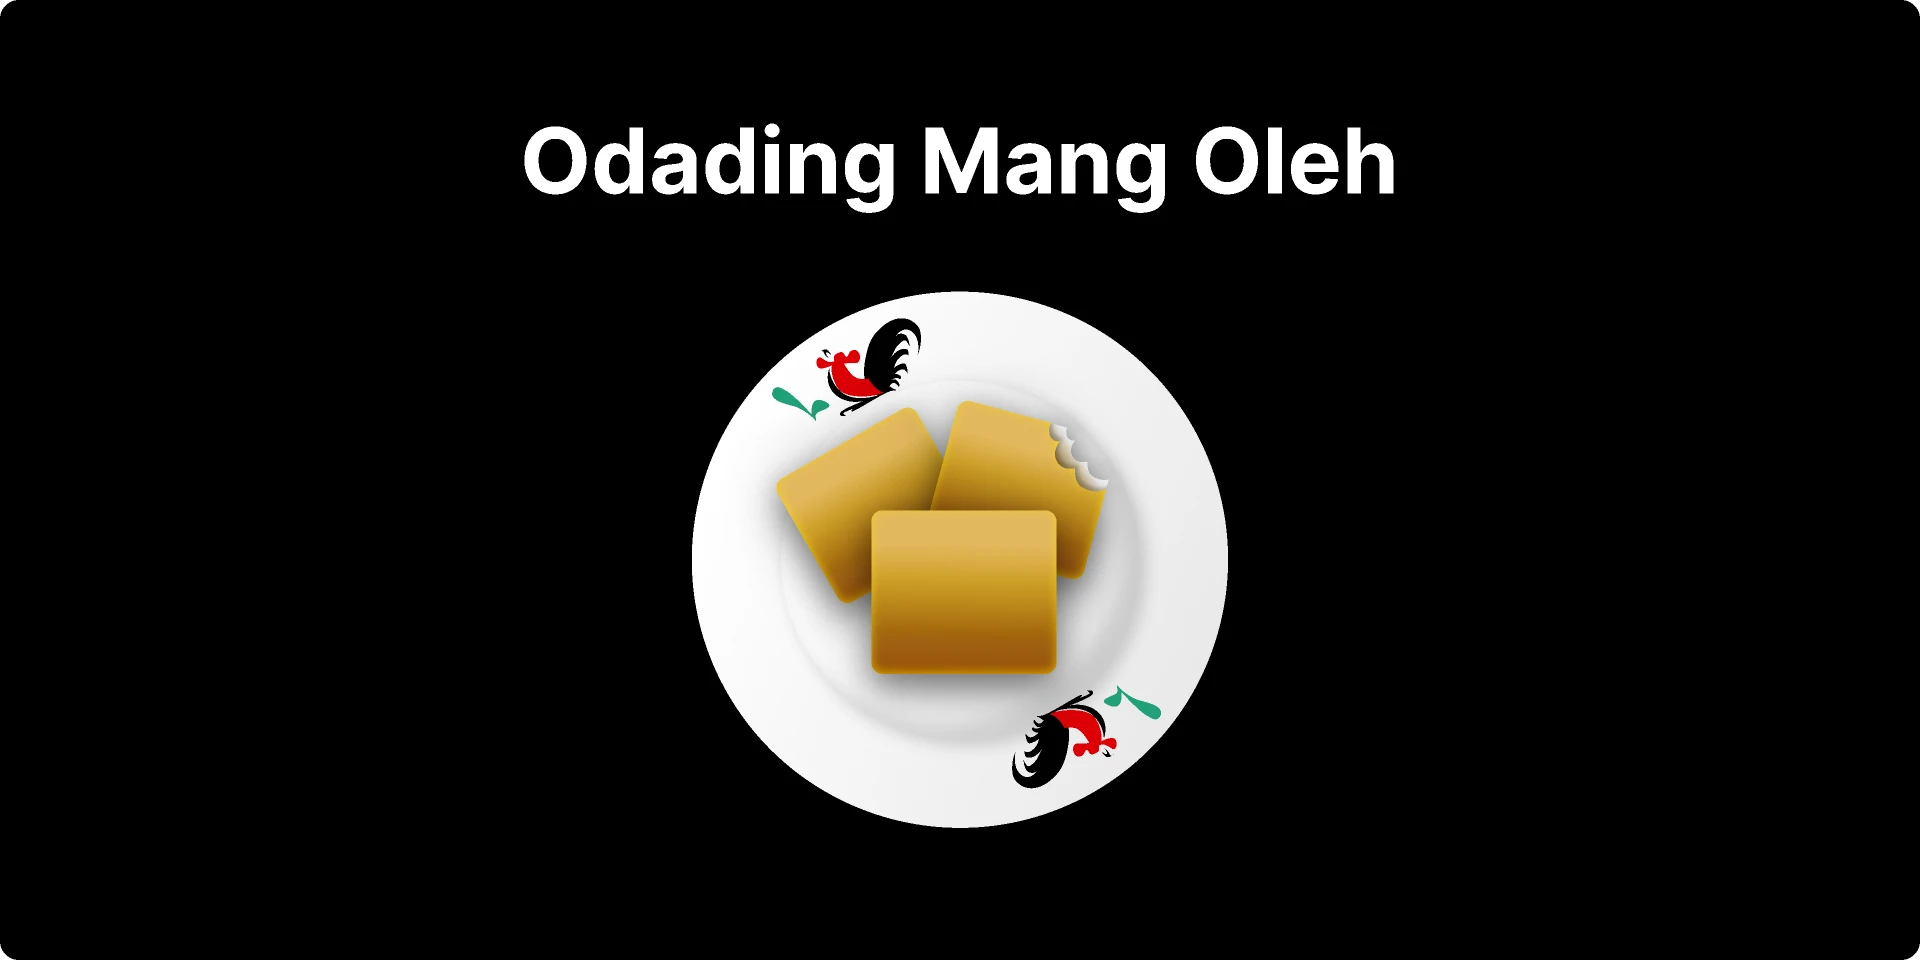 Odading Mang Oleh for Figma and Adobe XD